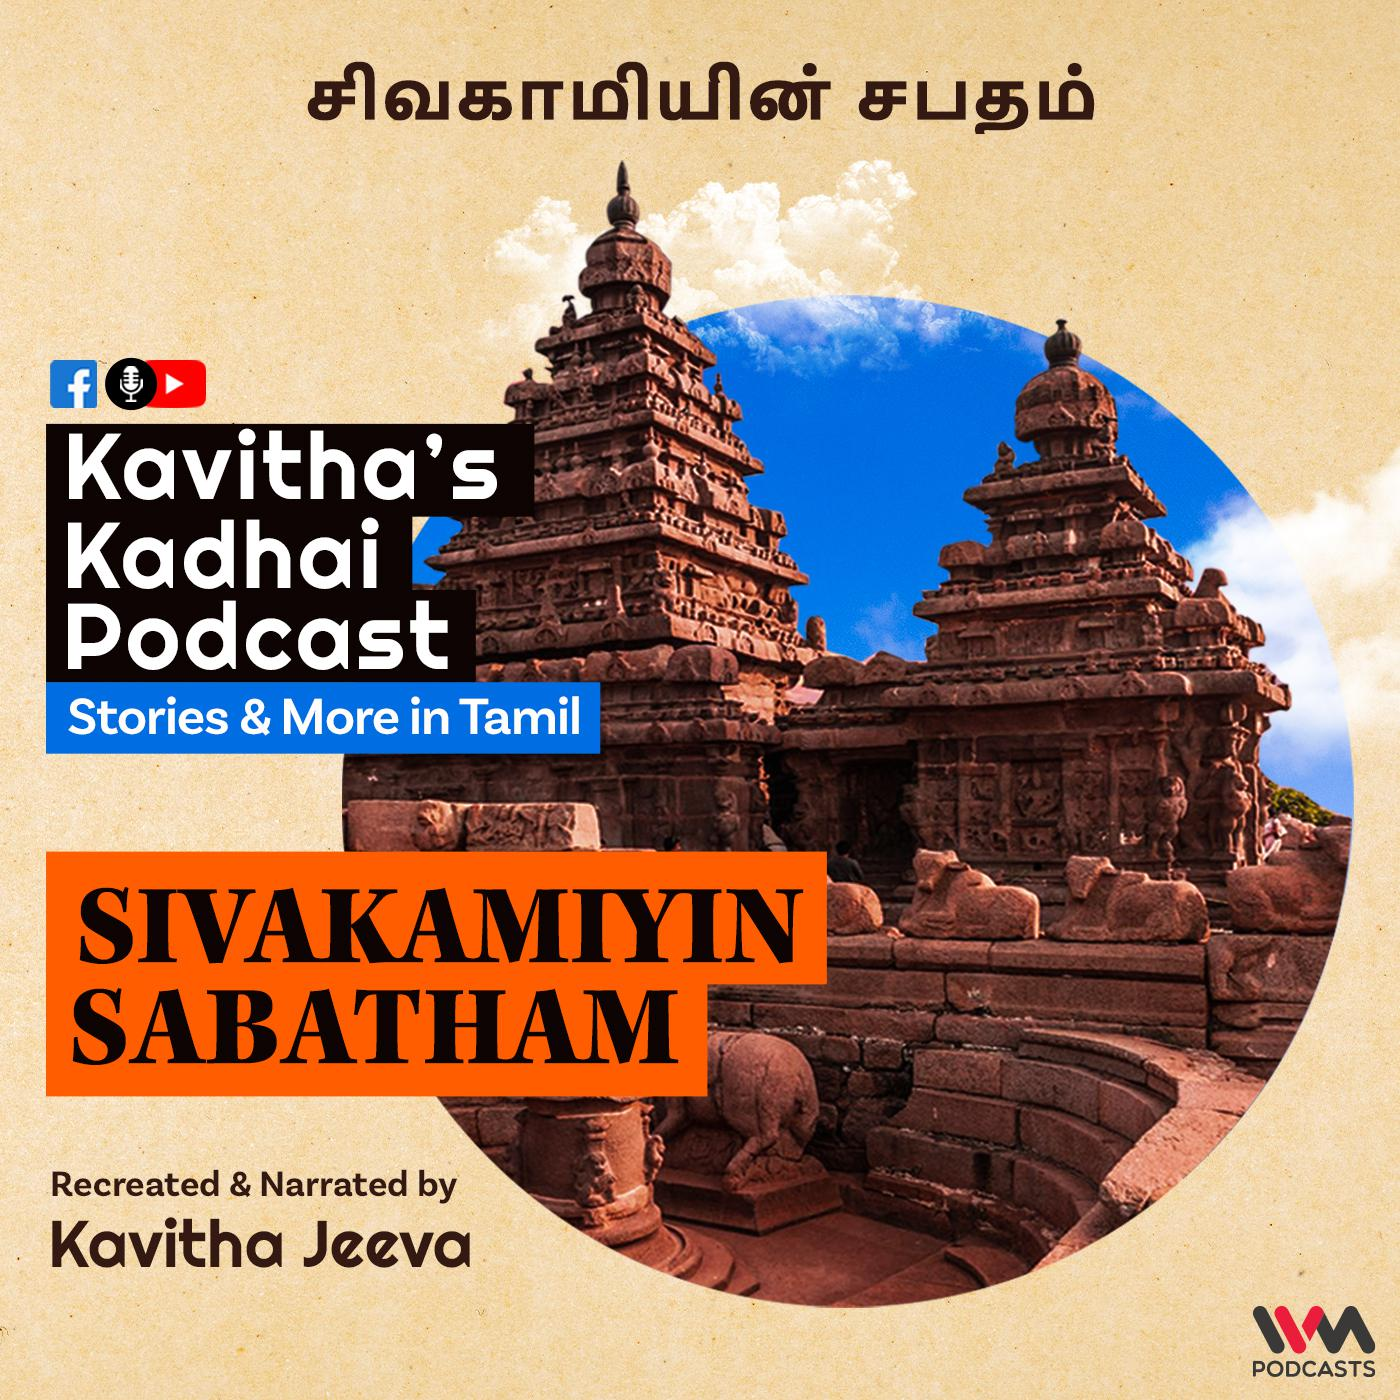 KadhaiPodcast's Sivakamiyin Sabatham with Kavitha Jeeva - Episode #139